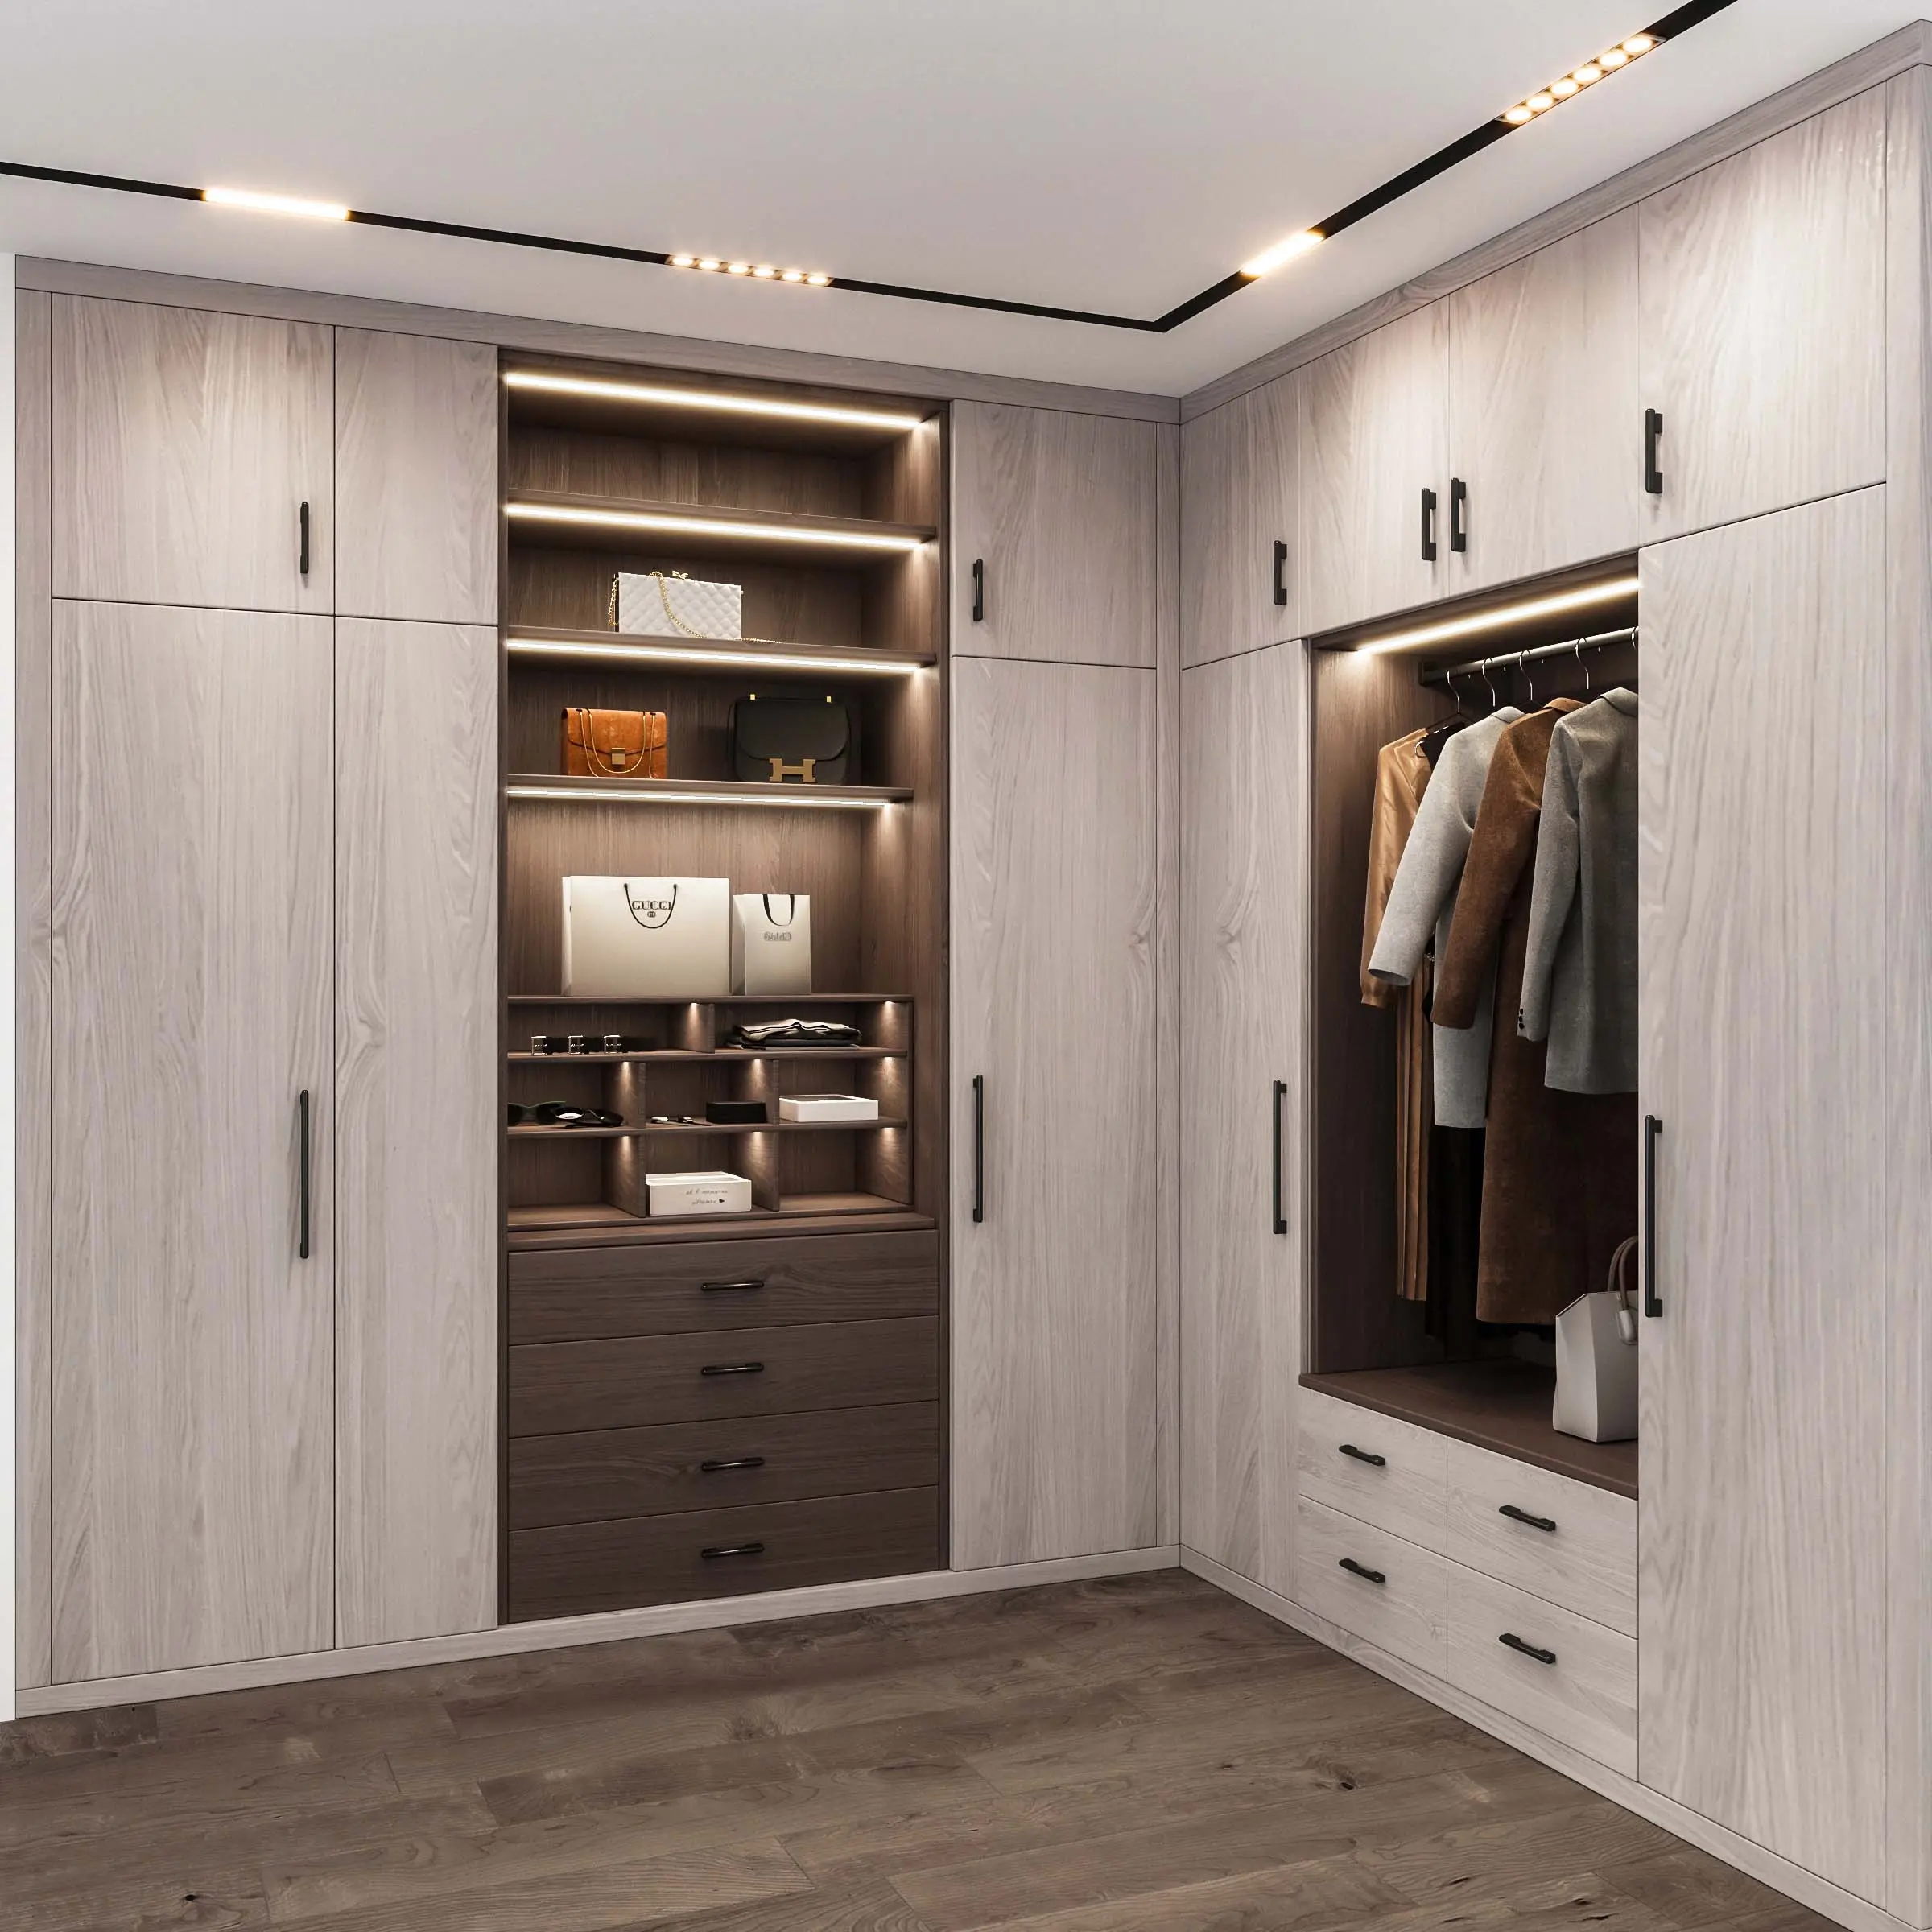 Custom Morden Design Latest Wardrobe Design Build in Wood White Closet Wardrobe Storage Closet Walk in Wardrobe